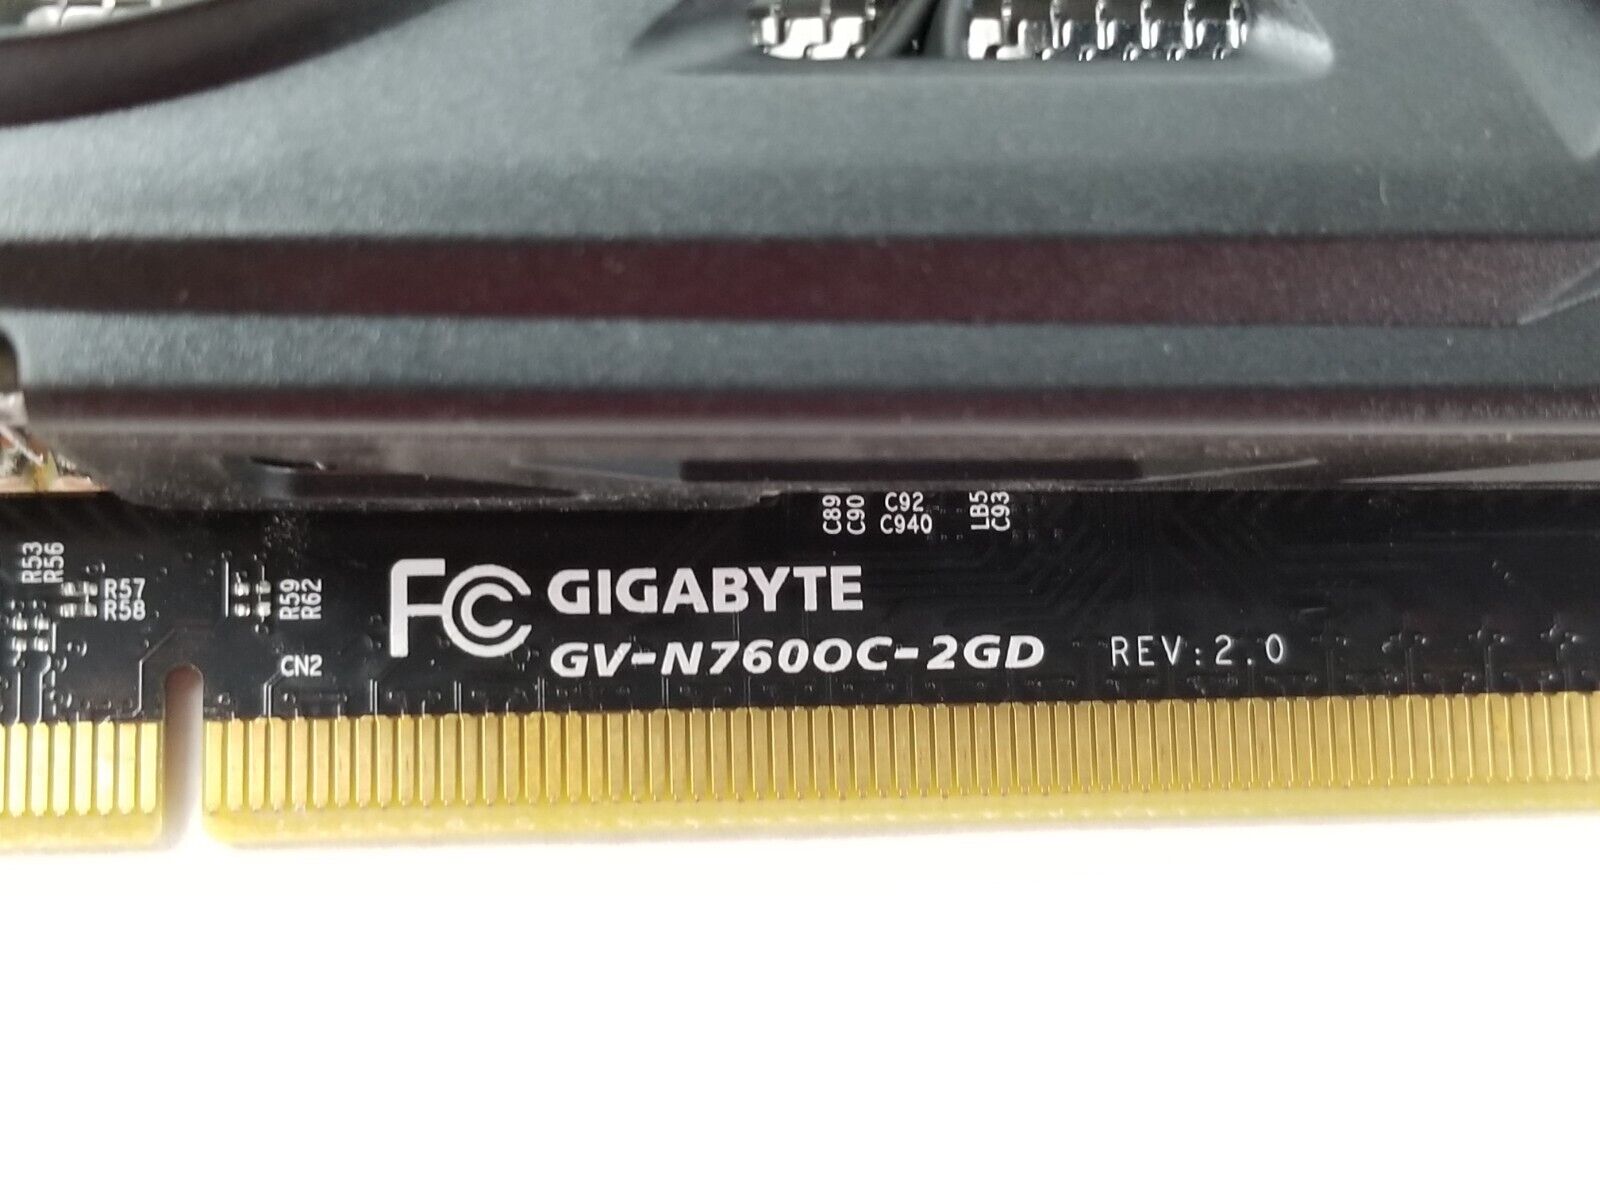 GIGABYTE Windforce nVidia GTX 760 OC 2GB GV-N760OC-2GD Parts Or Repair